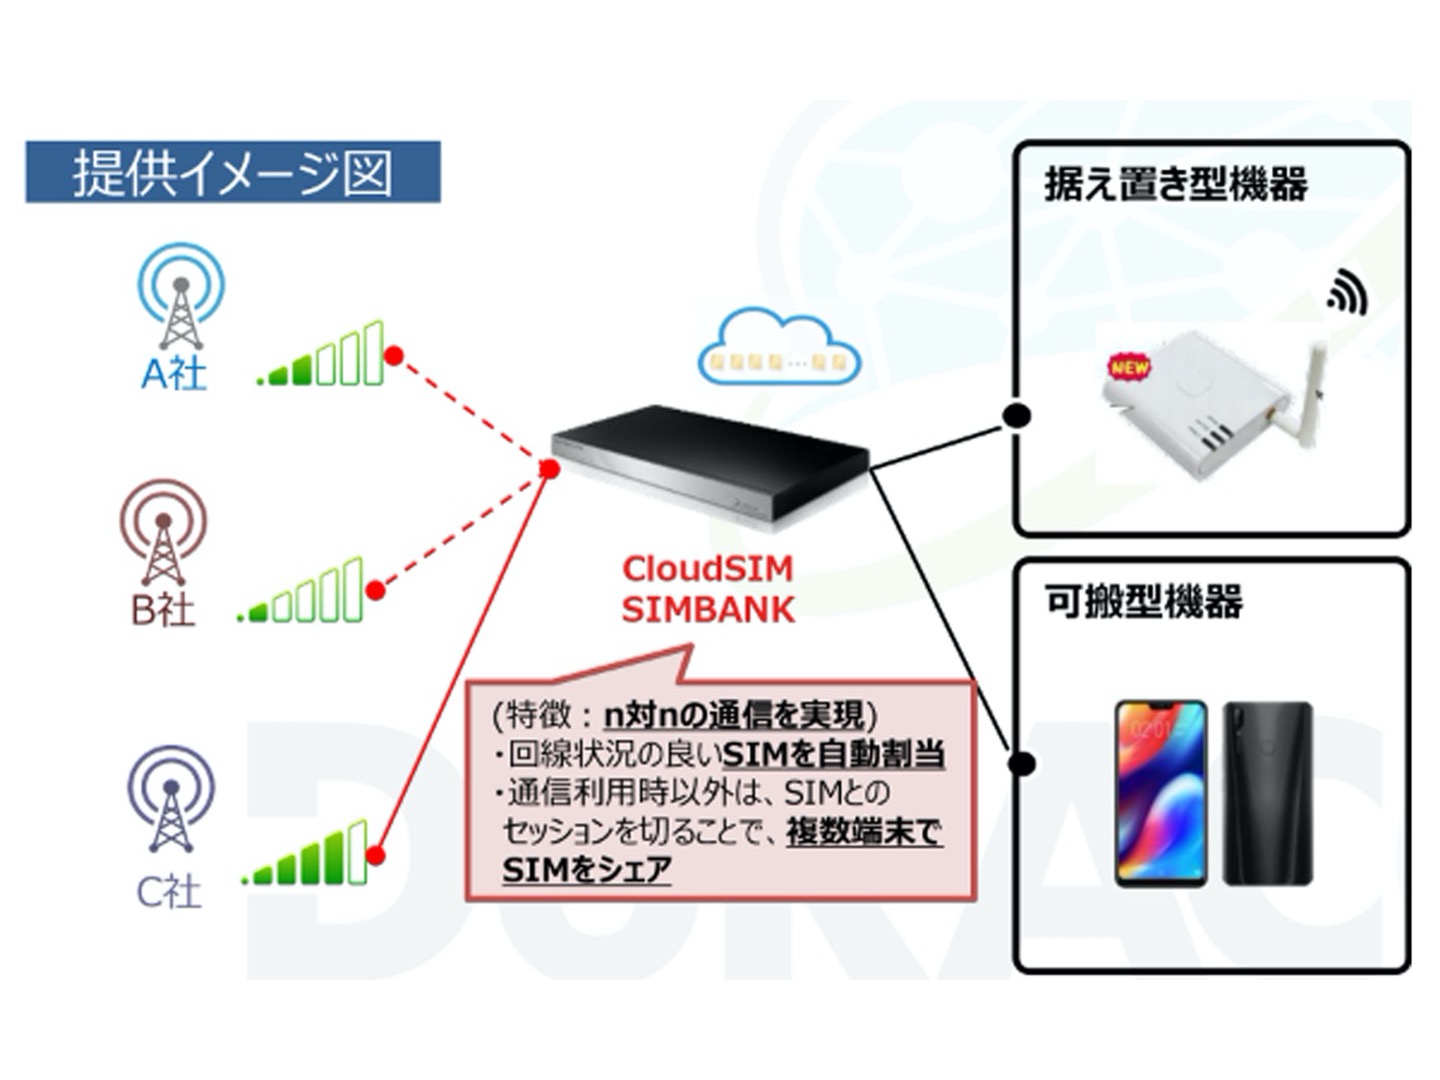 NTT launches Cloud SIM mobile broadband service in Japan